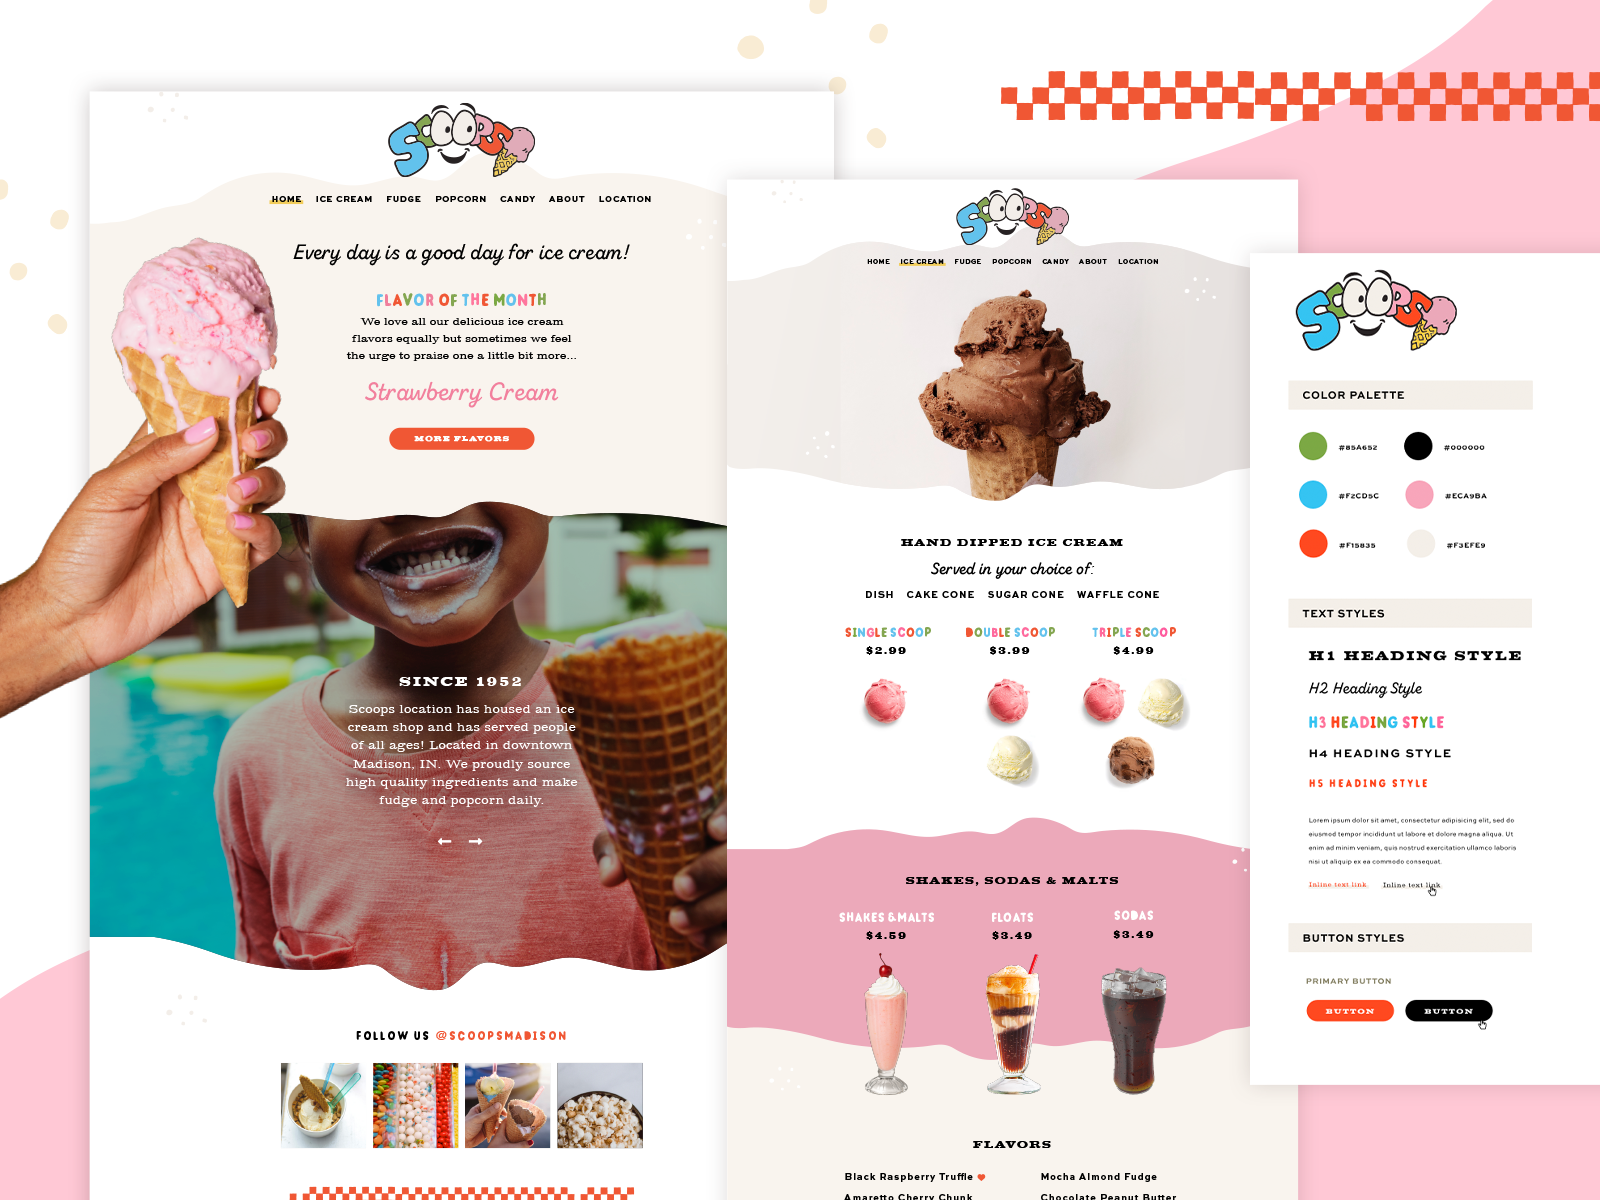 Scoops flavor ice cream ice cream shop illustration png retro scoop vintage web web banner